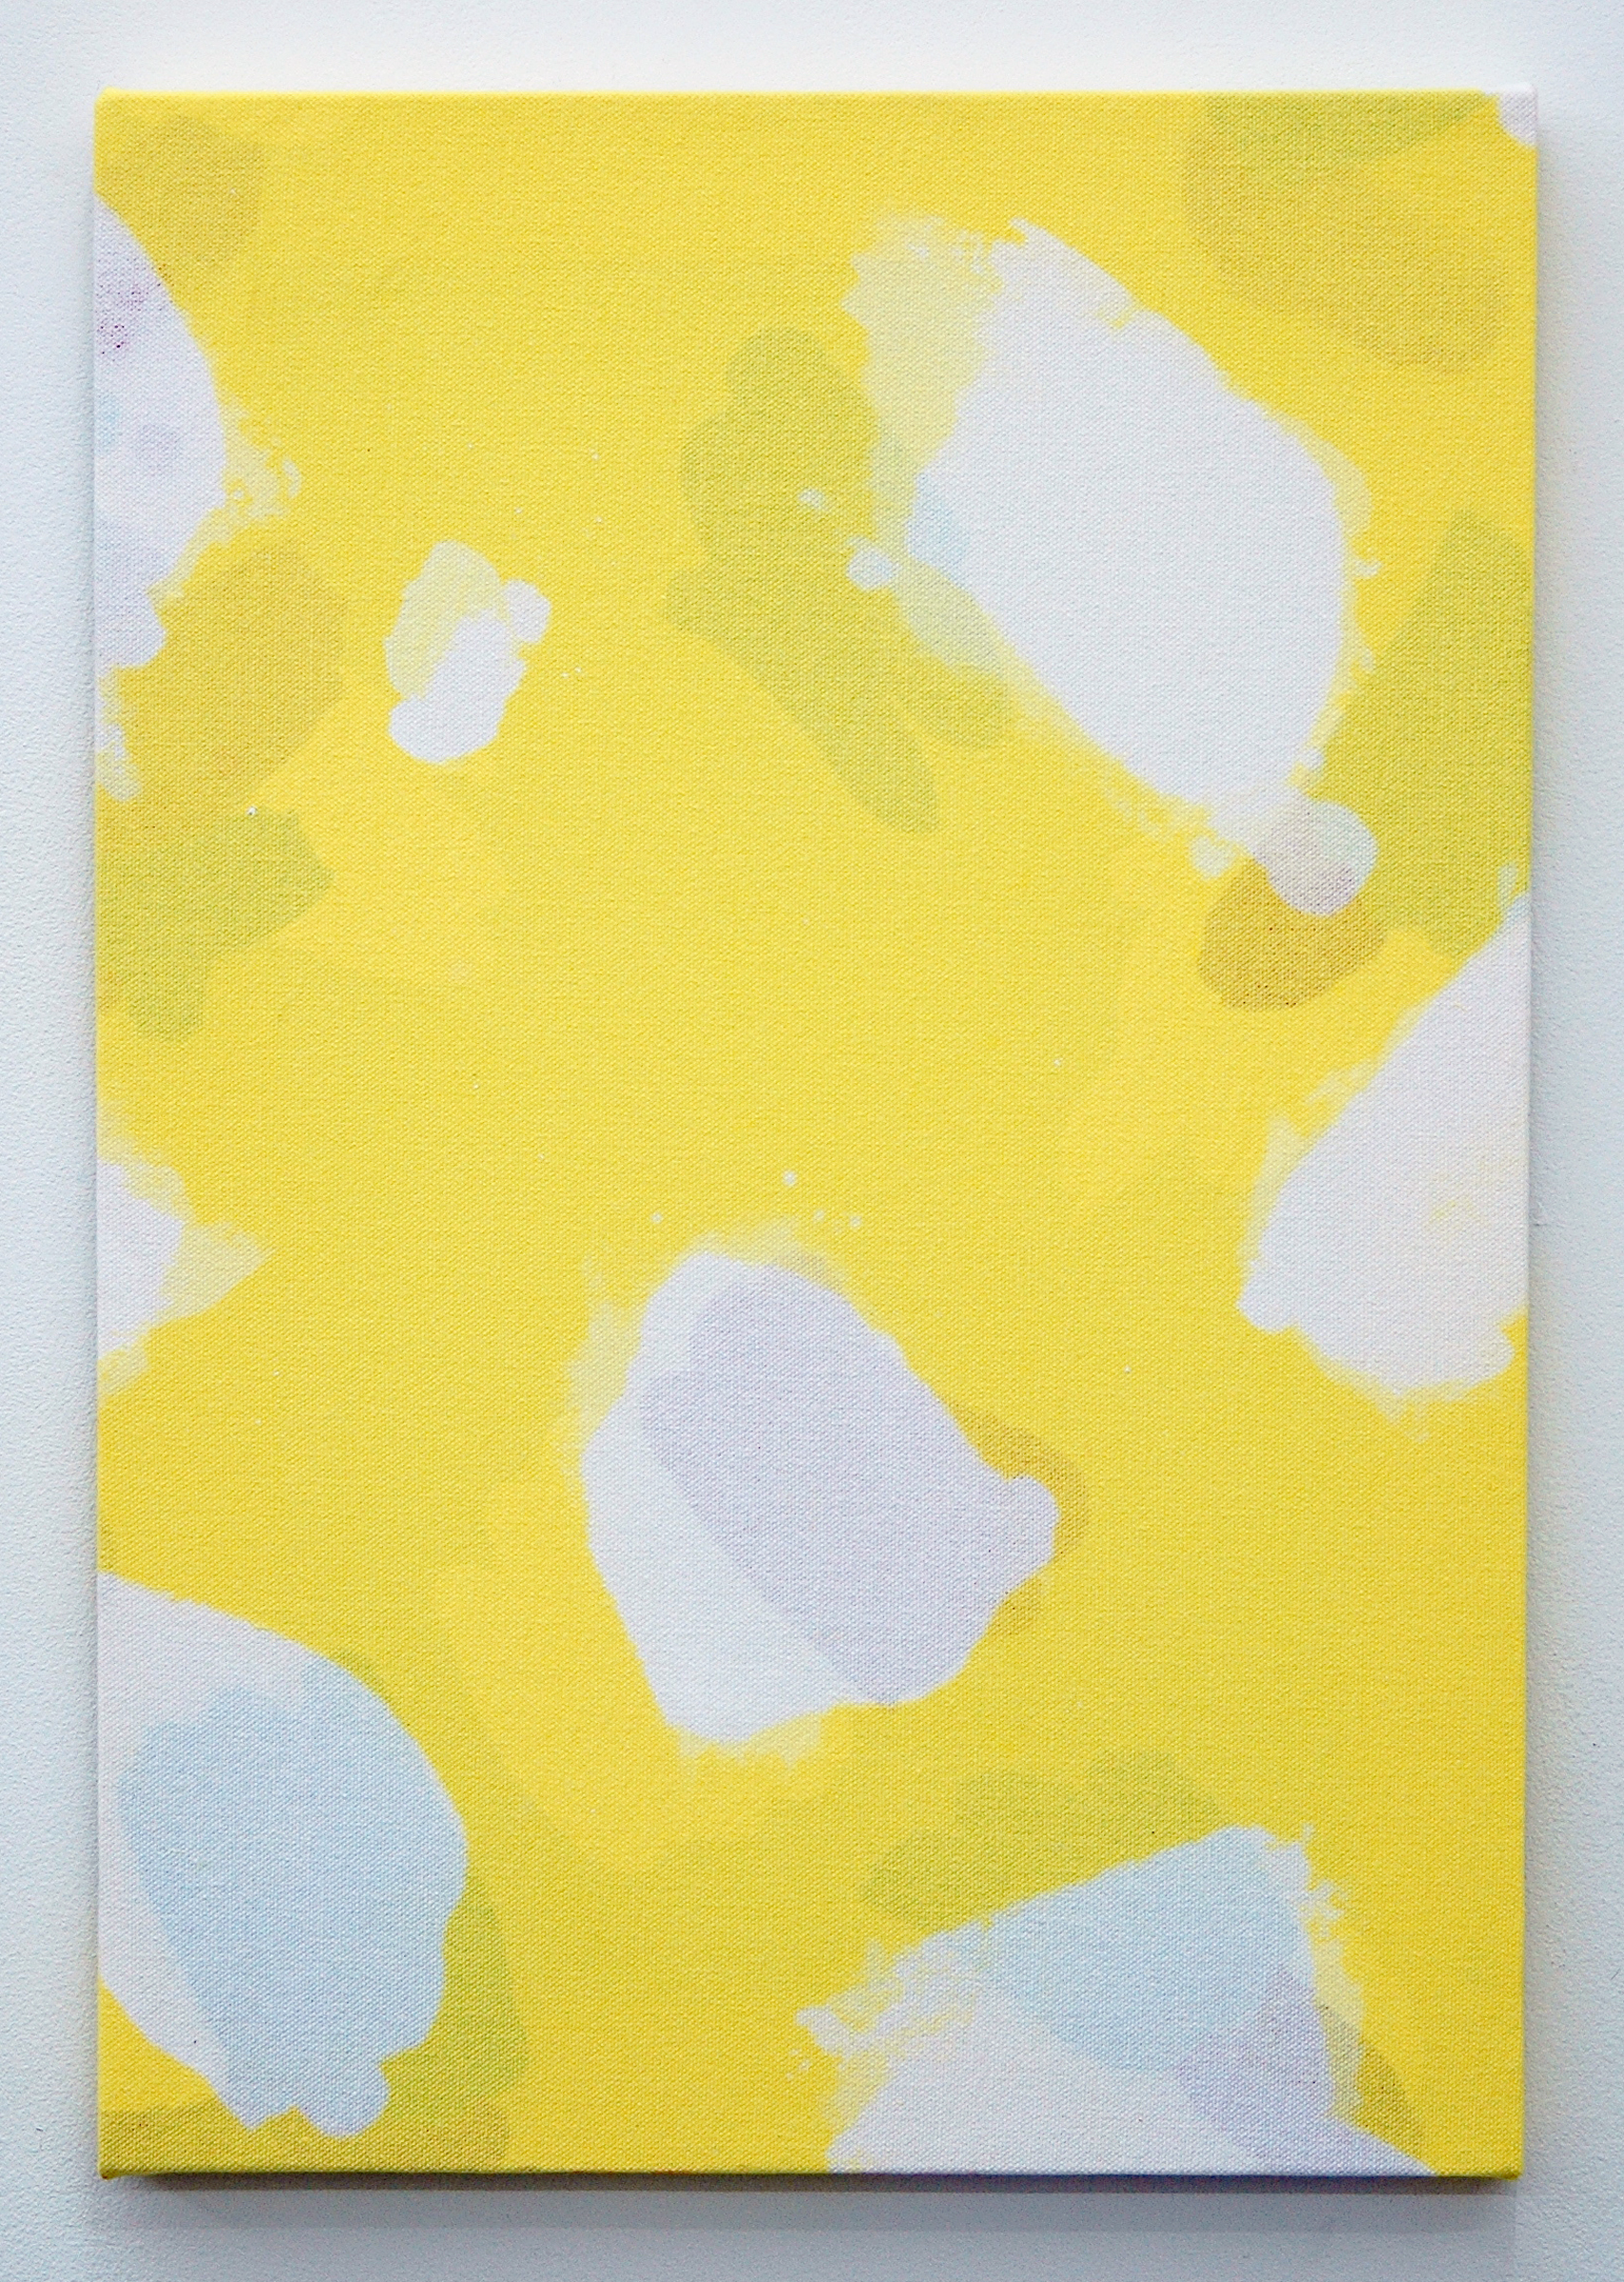   /SLASH/  Amanda Curreri, &nbsp;Calm Lunatics (Pattern for Performance, Reverse) , fabric dye, acrylic, dye remover on cotton 19" x 13", 2014 